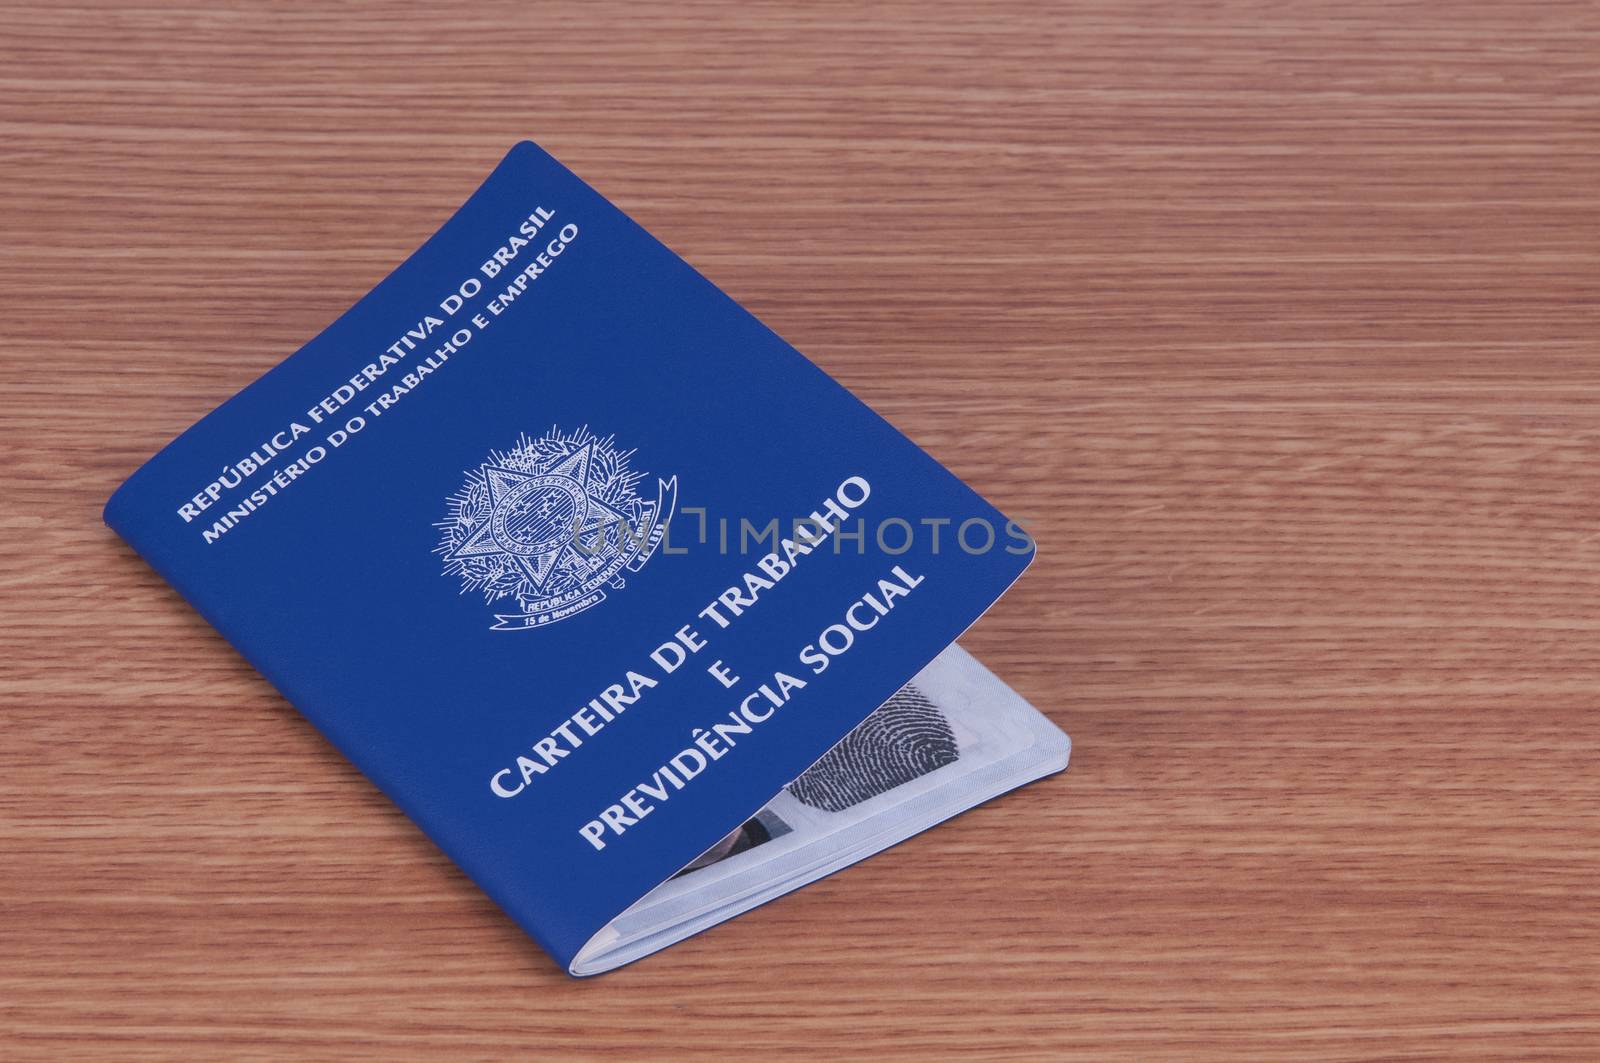 Brazilian work document and social security document (carteira d by rodrigobellizzi